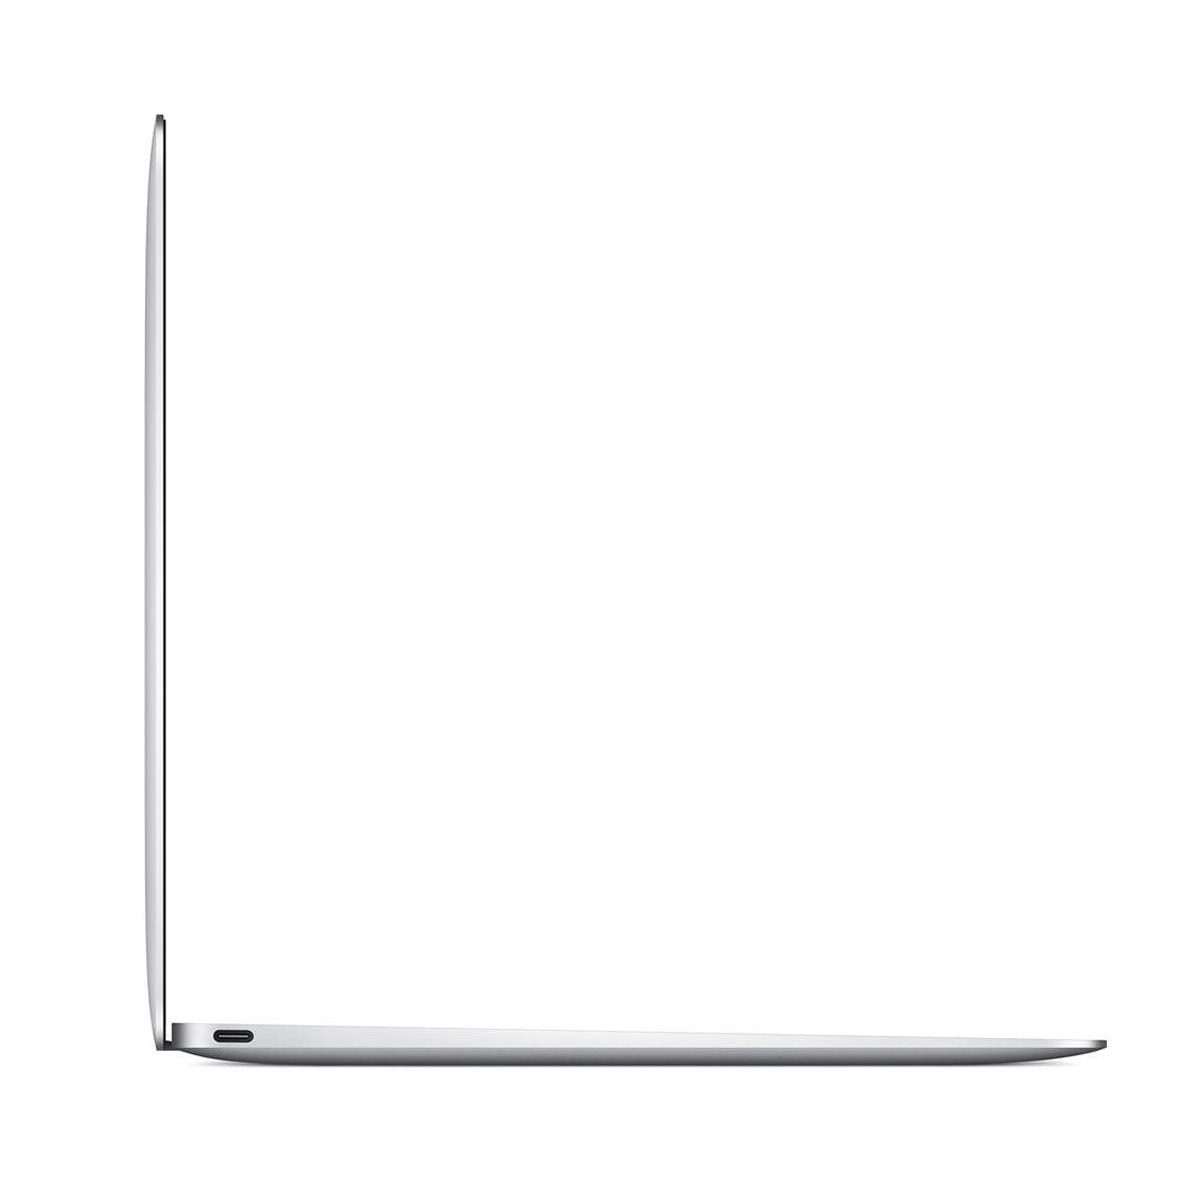 Ноутбук Apple MacBook 12 2016 Silver (MLHC2RU/A) (Core m5 1200Mhz/12.0/2304x1440/8.0Gb/512Gb SSD/DVD нет/Intel HD Graphics 515/Wi-Fi/Bluetooth/MacOS X)